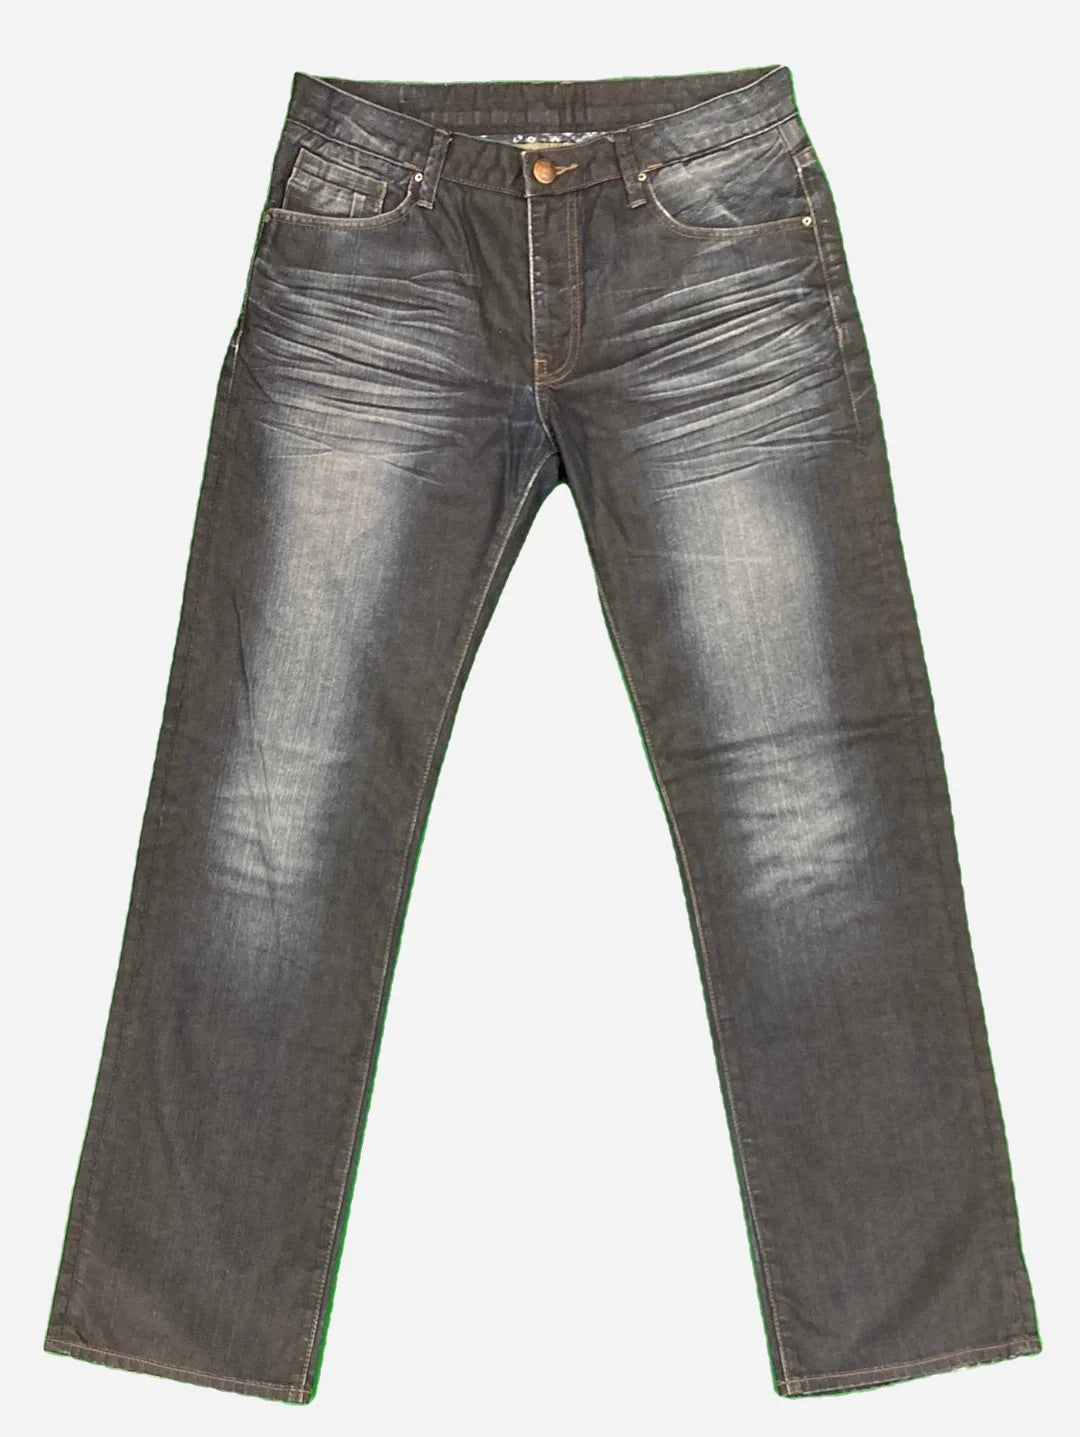 Tom Tailor Jeans 34/34 (XL)